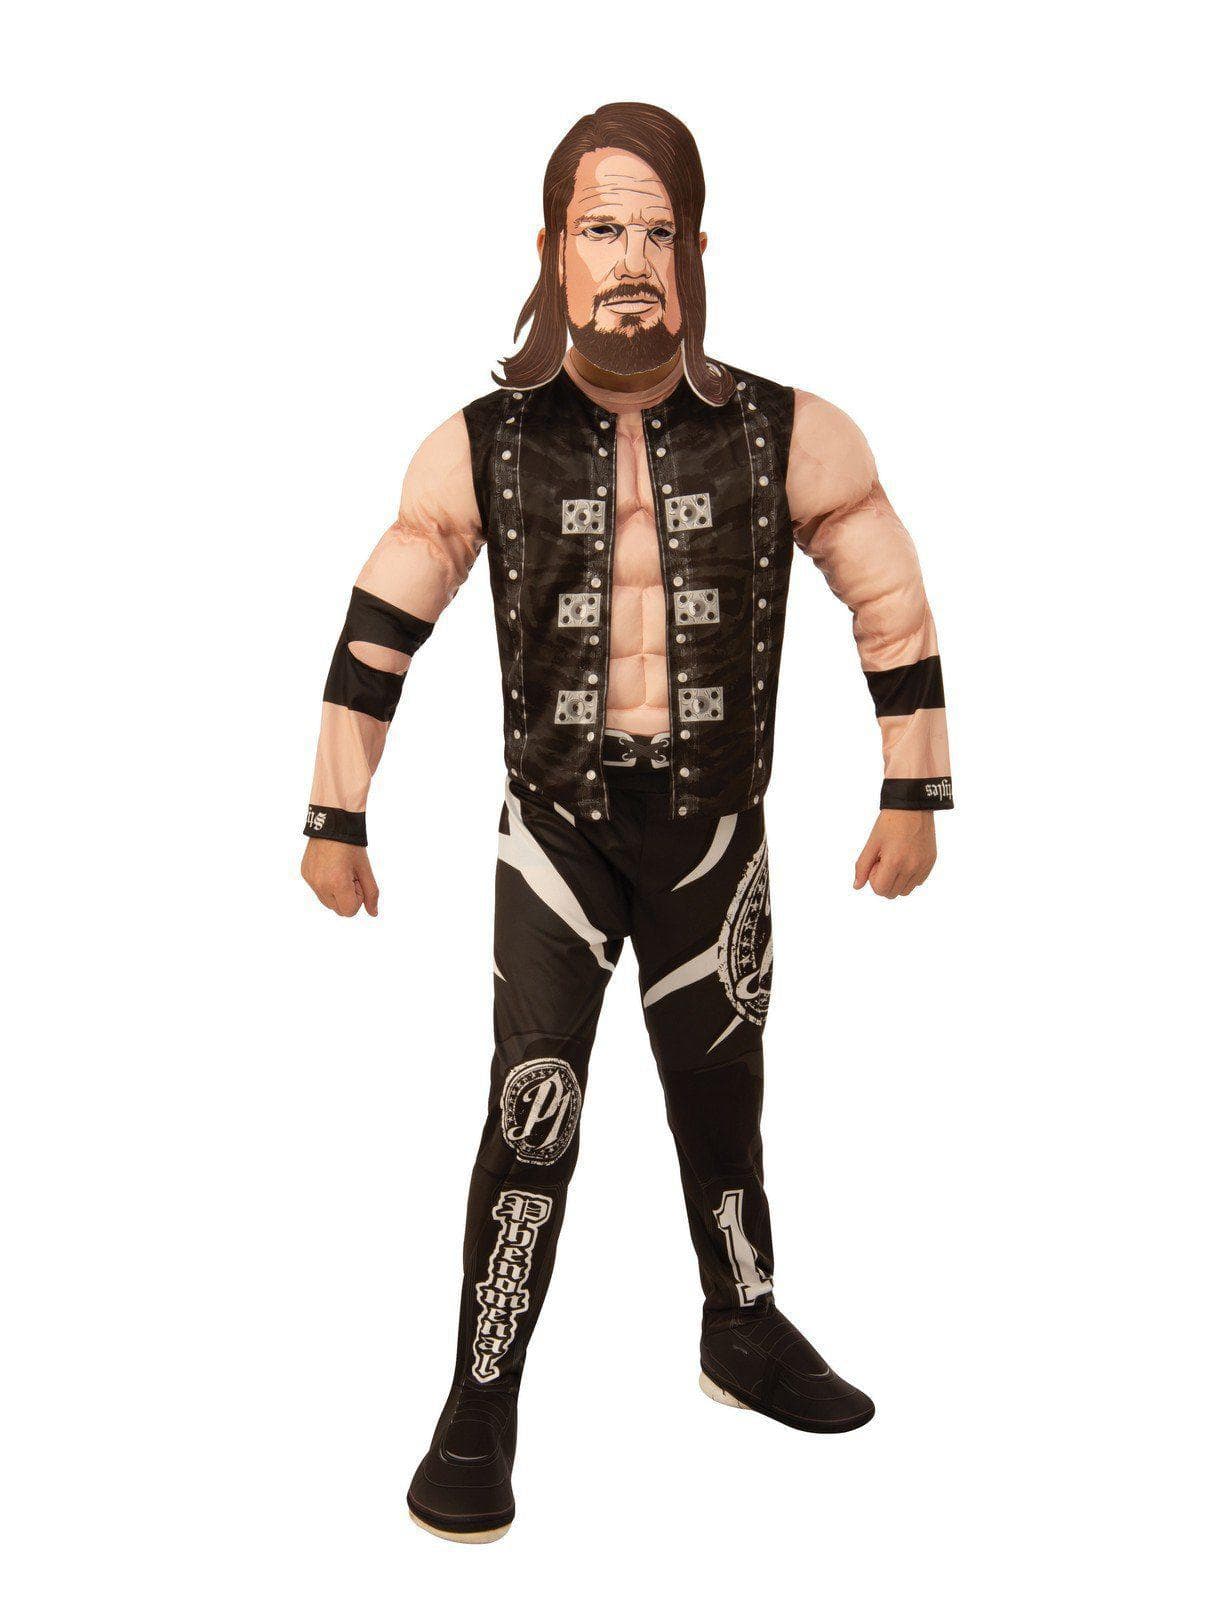 Kids WWE AJ Styles Deluxe Costume - costumes.com